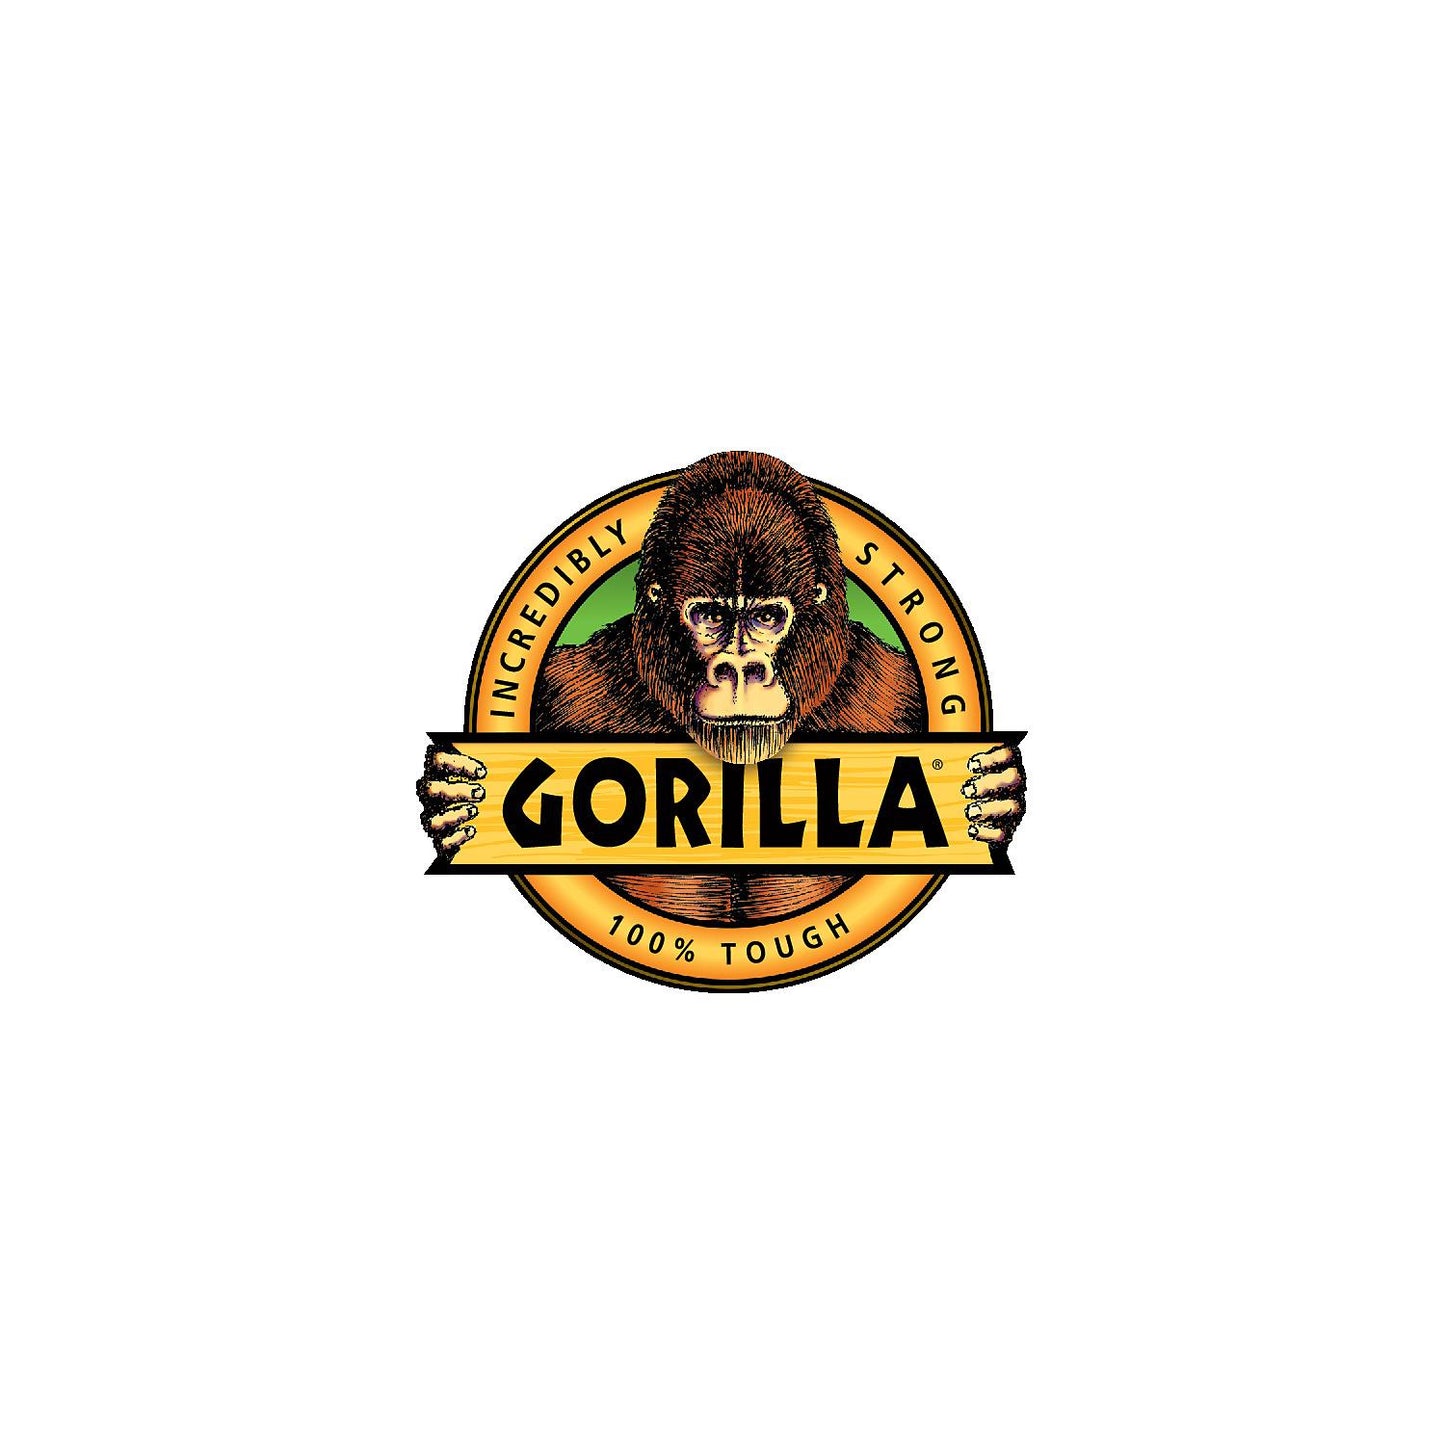 Gorilla Clear Grip, 4 Pack